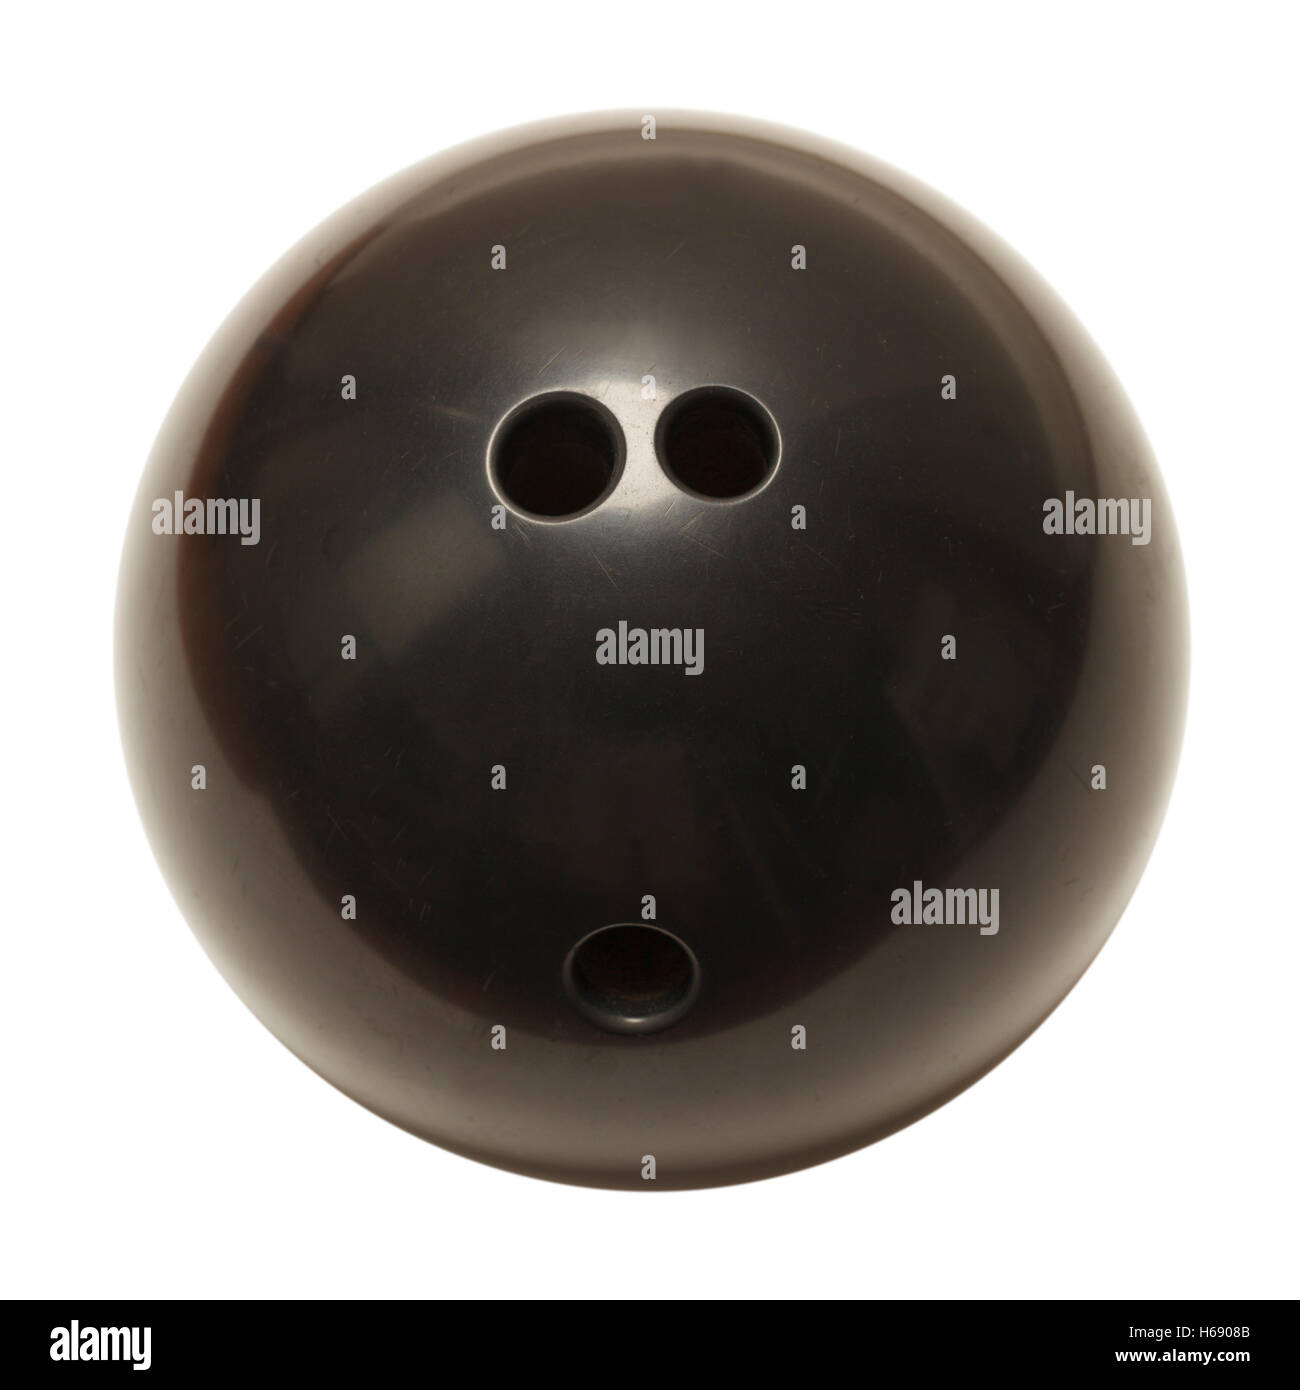 Schwarzen Bowling-Kugel mit Löchern, Isolated on White Background  Stockfotografie - Alamy